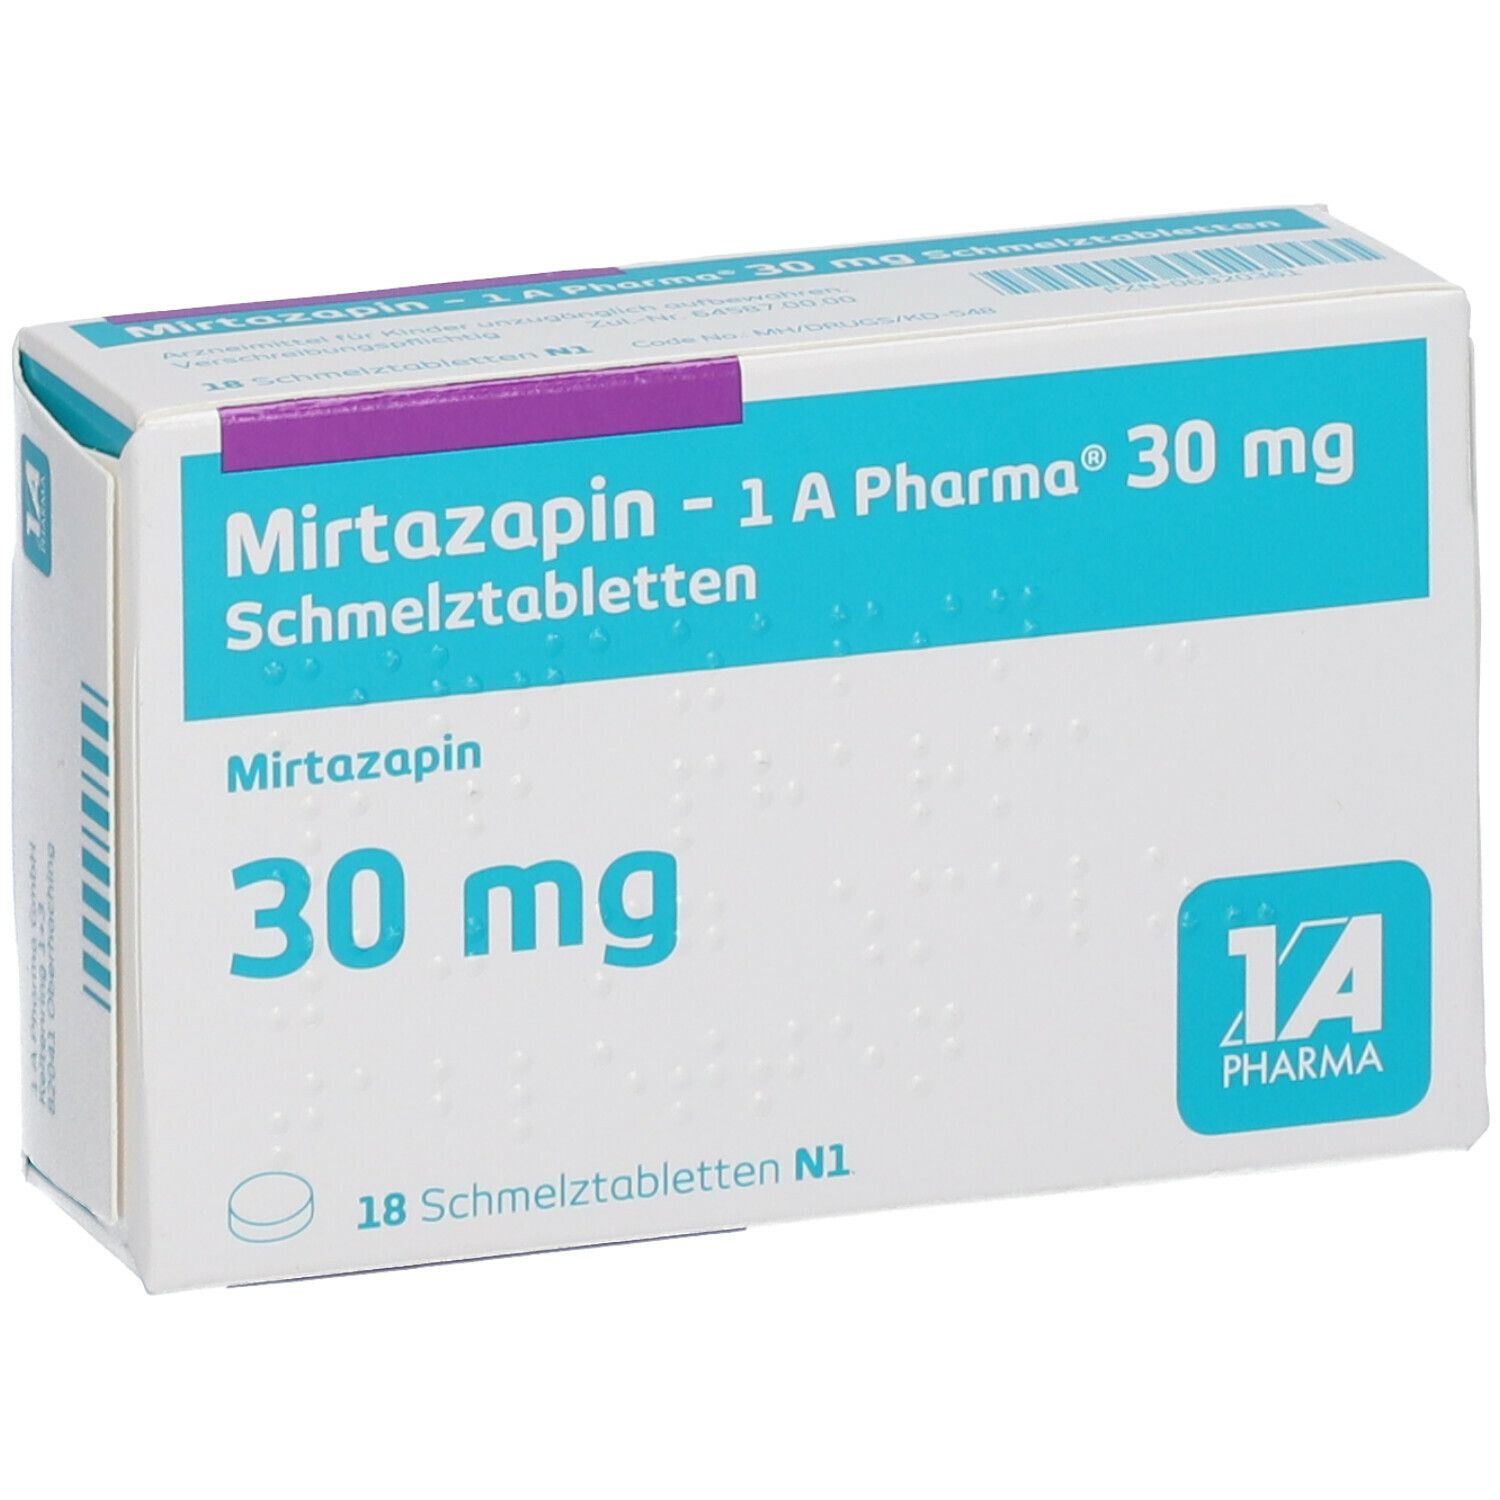 Mirtazapin - 1 A Pharma® 30 mg Schmelztabletten